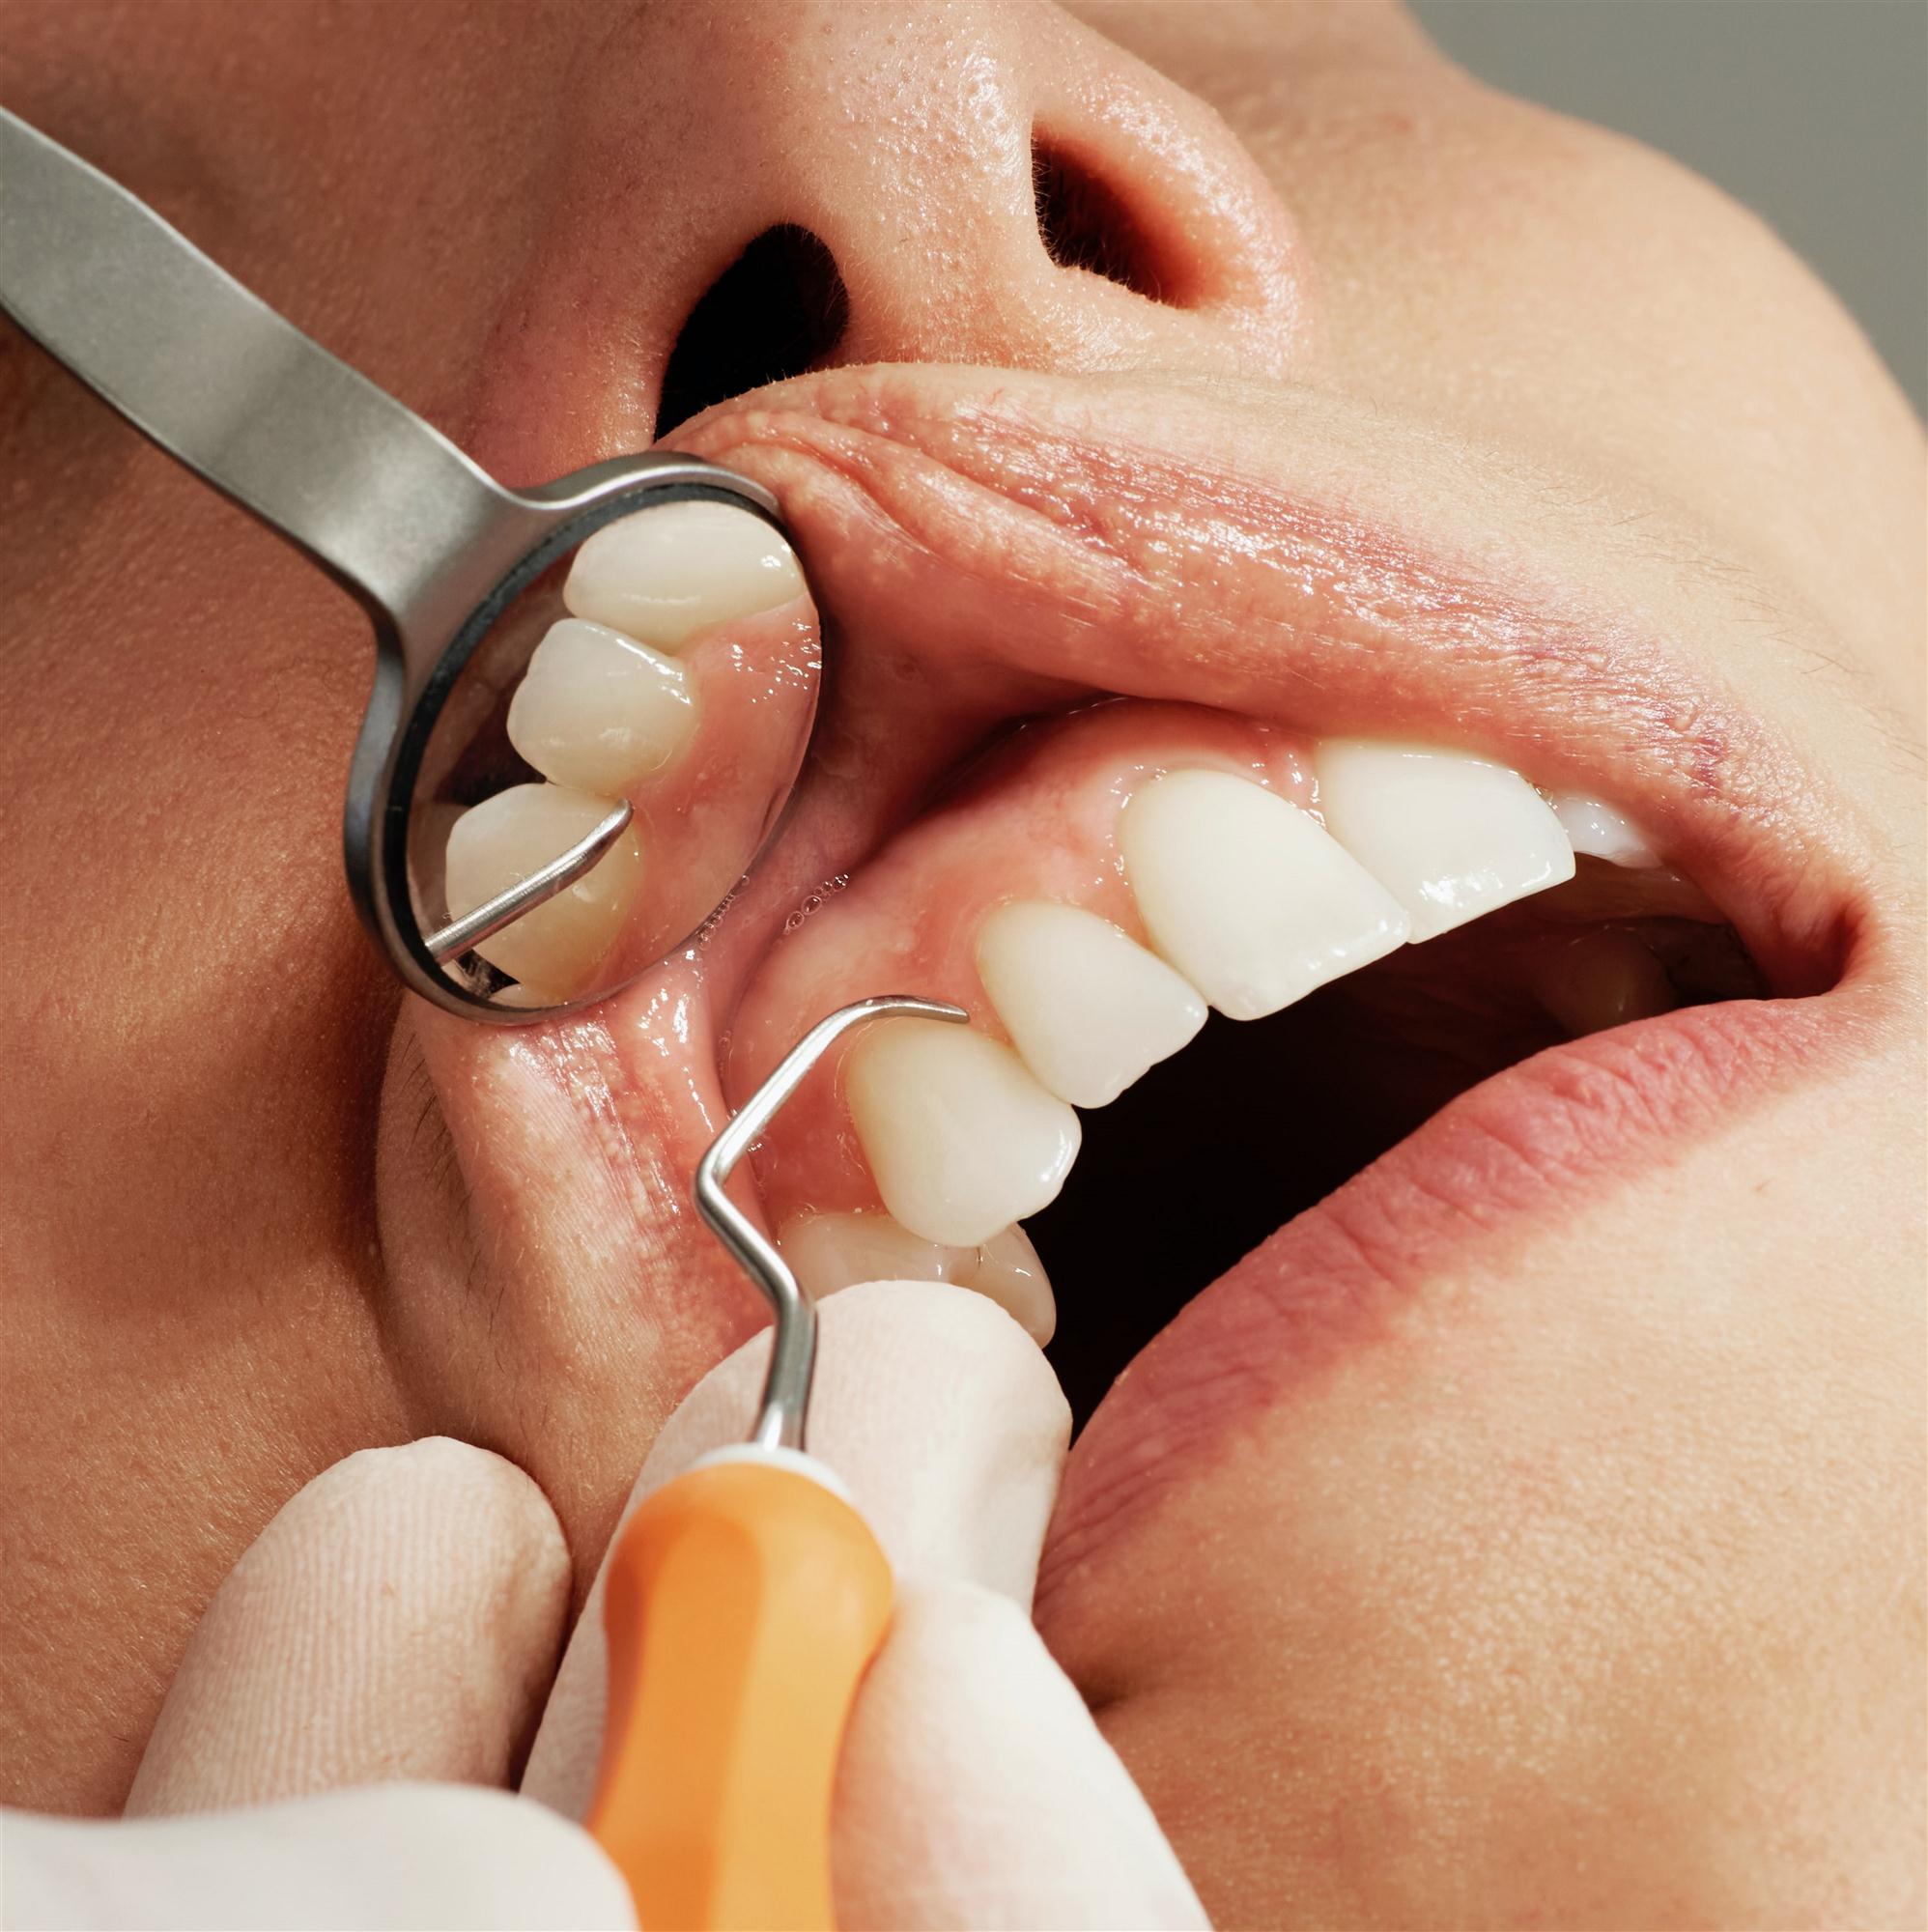 Preventative dental services